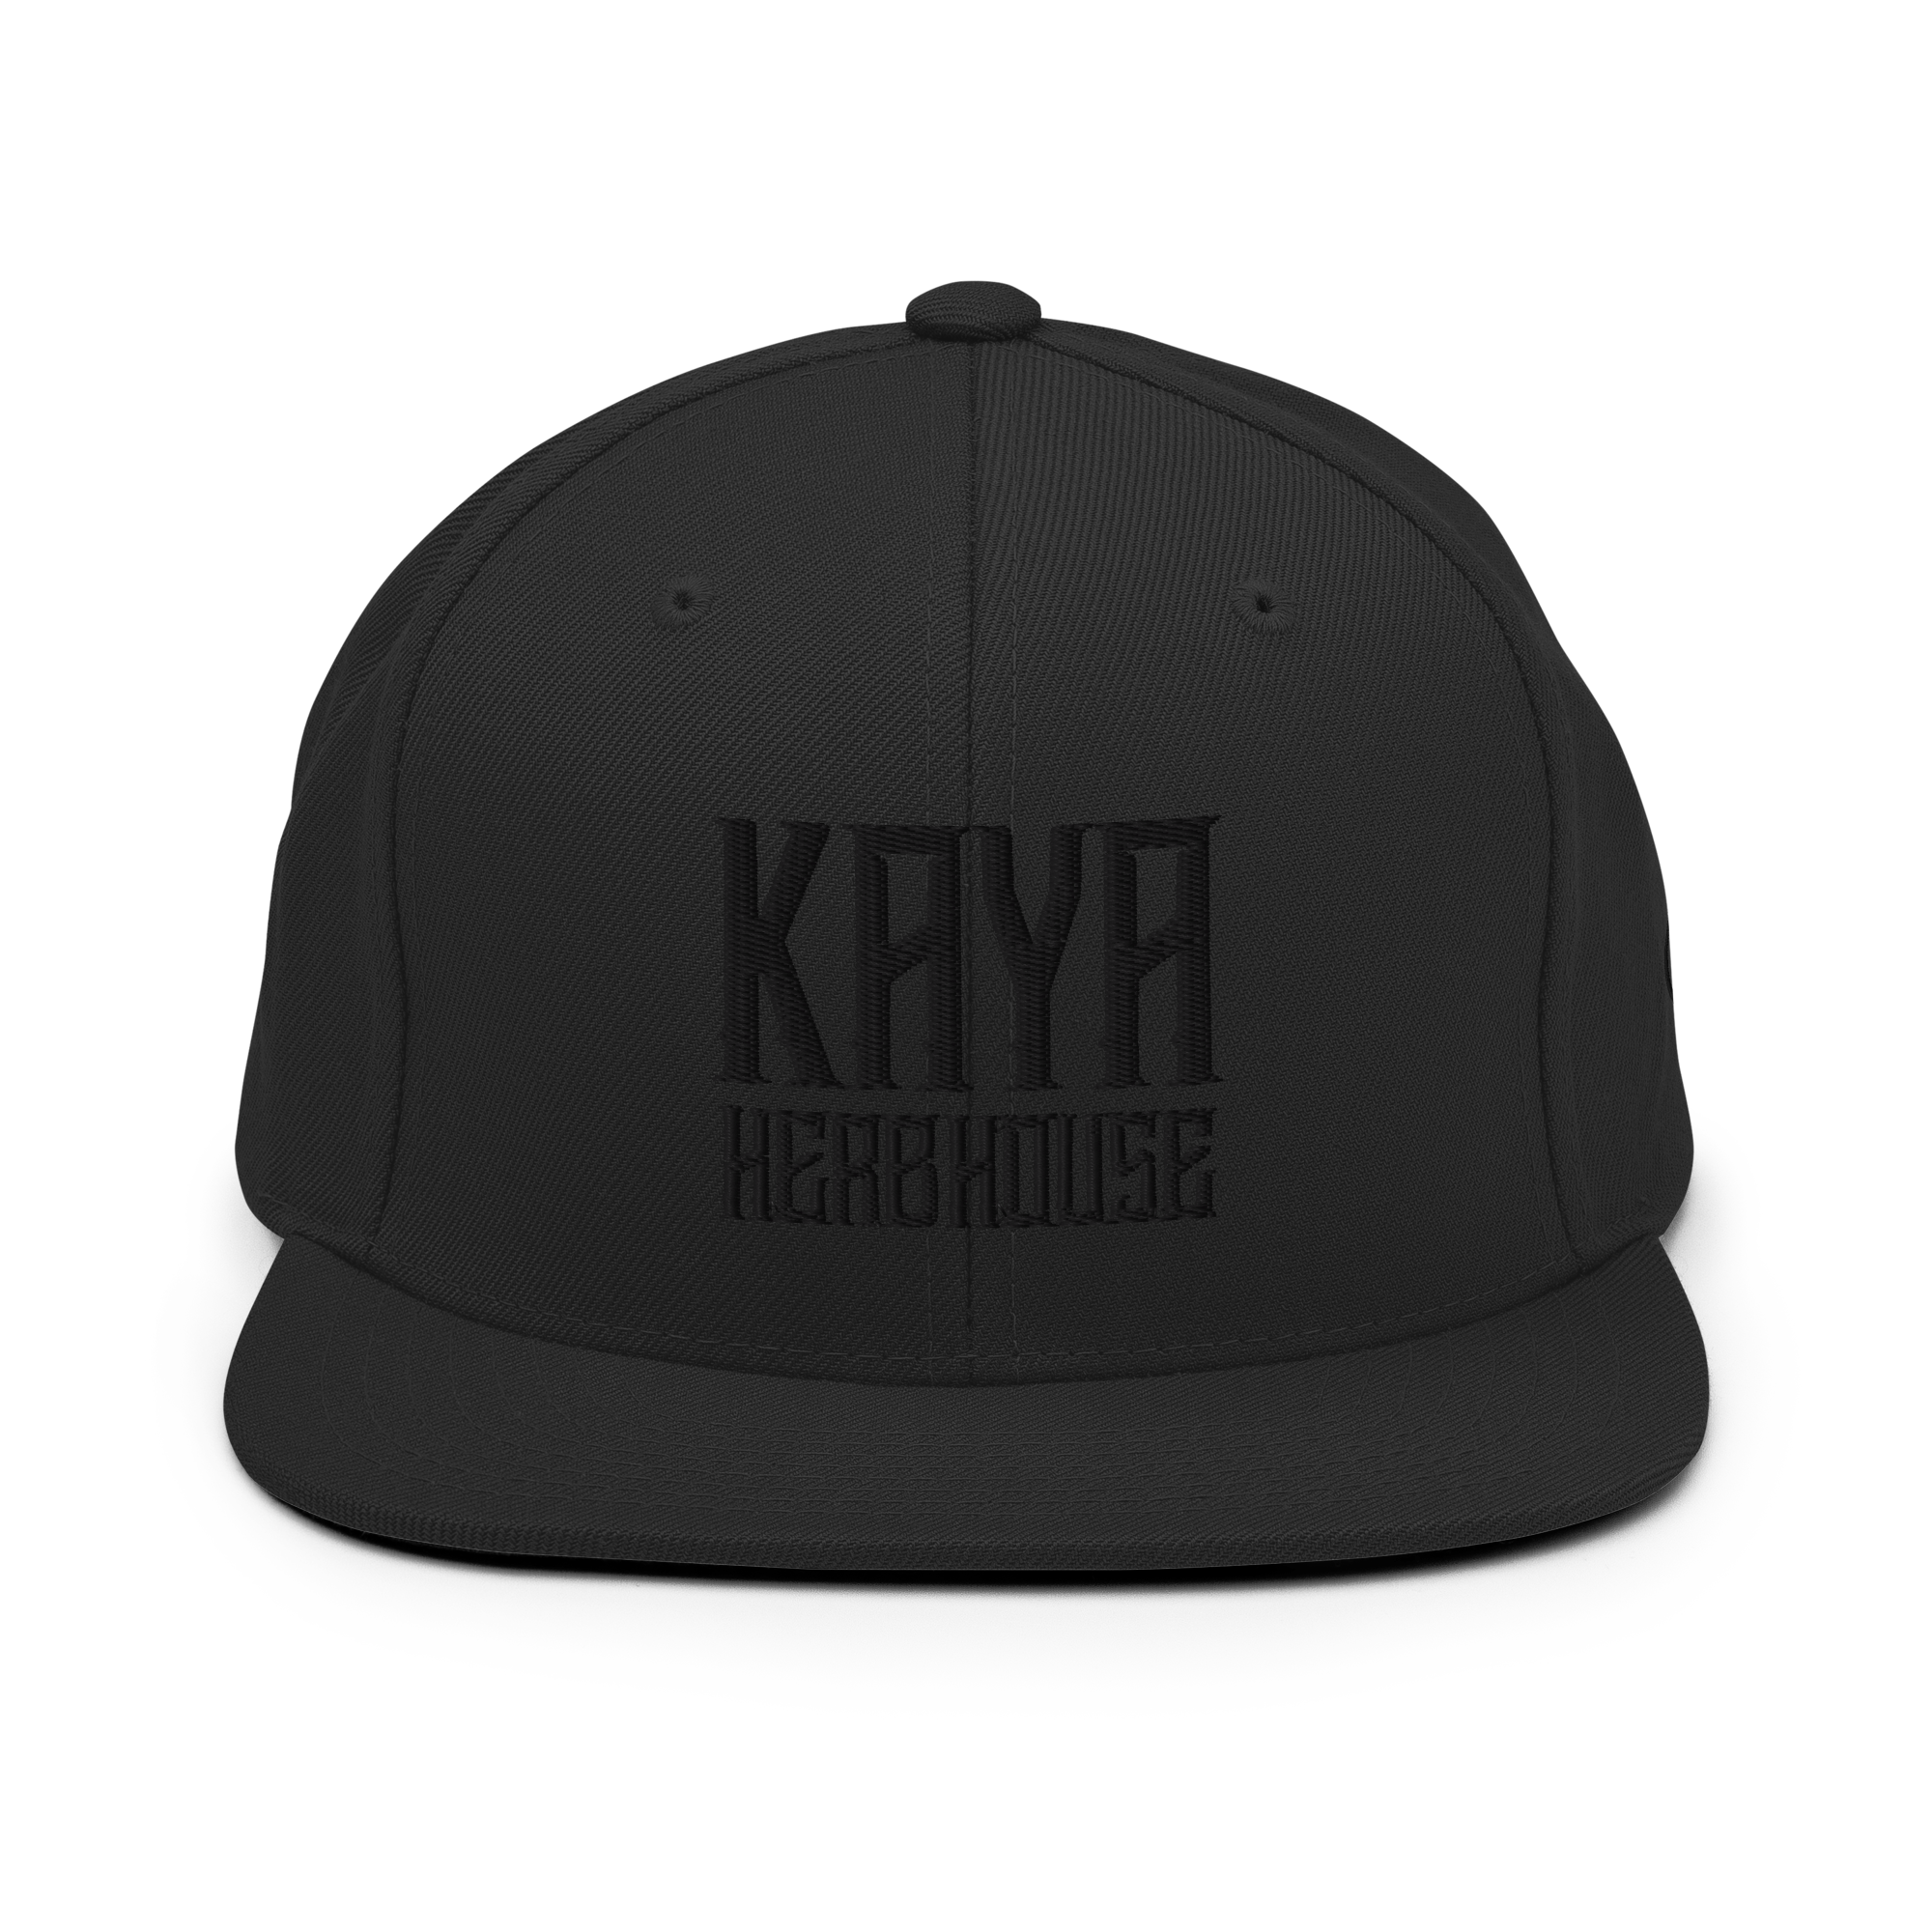 Unisex Snapback Light Kaya Herb House Hat